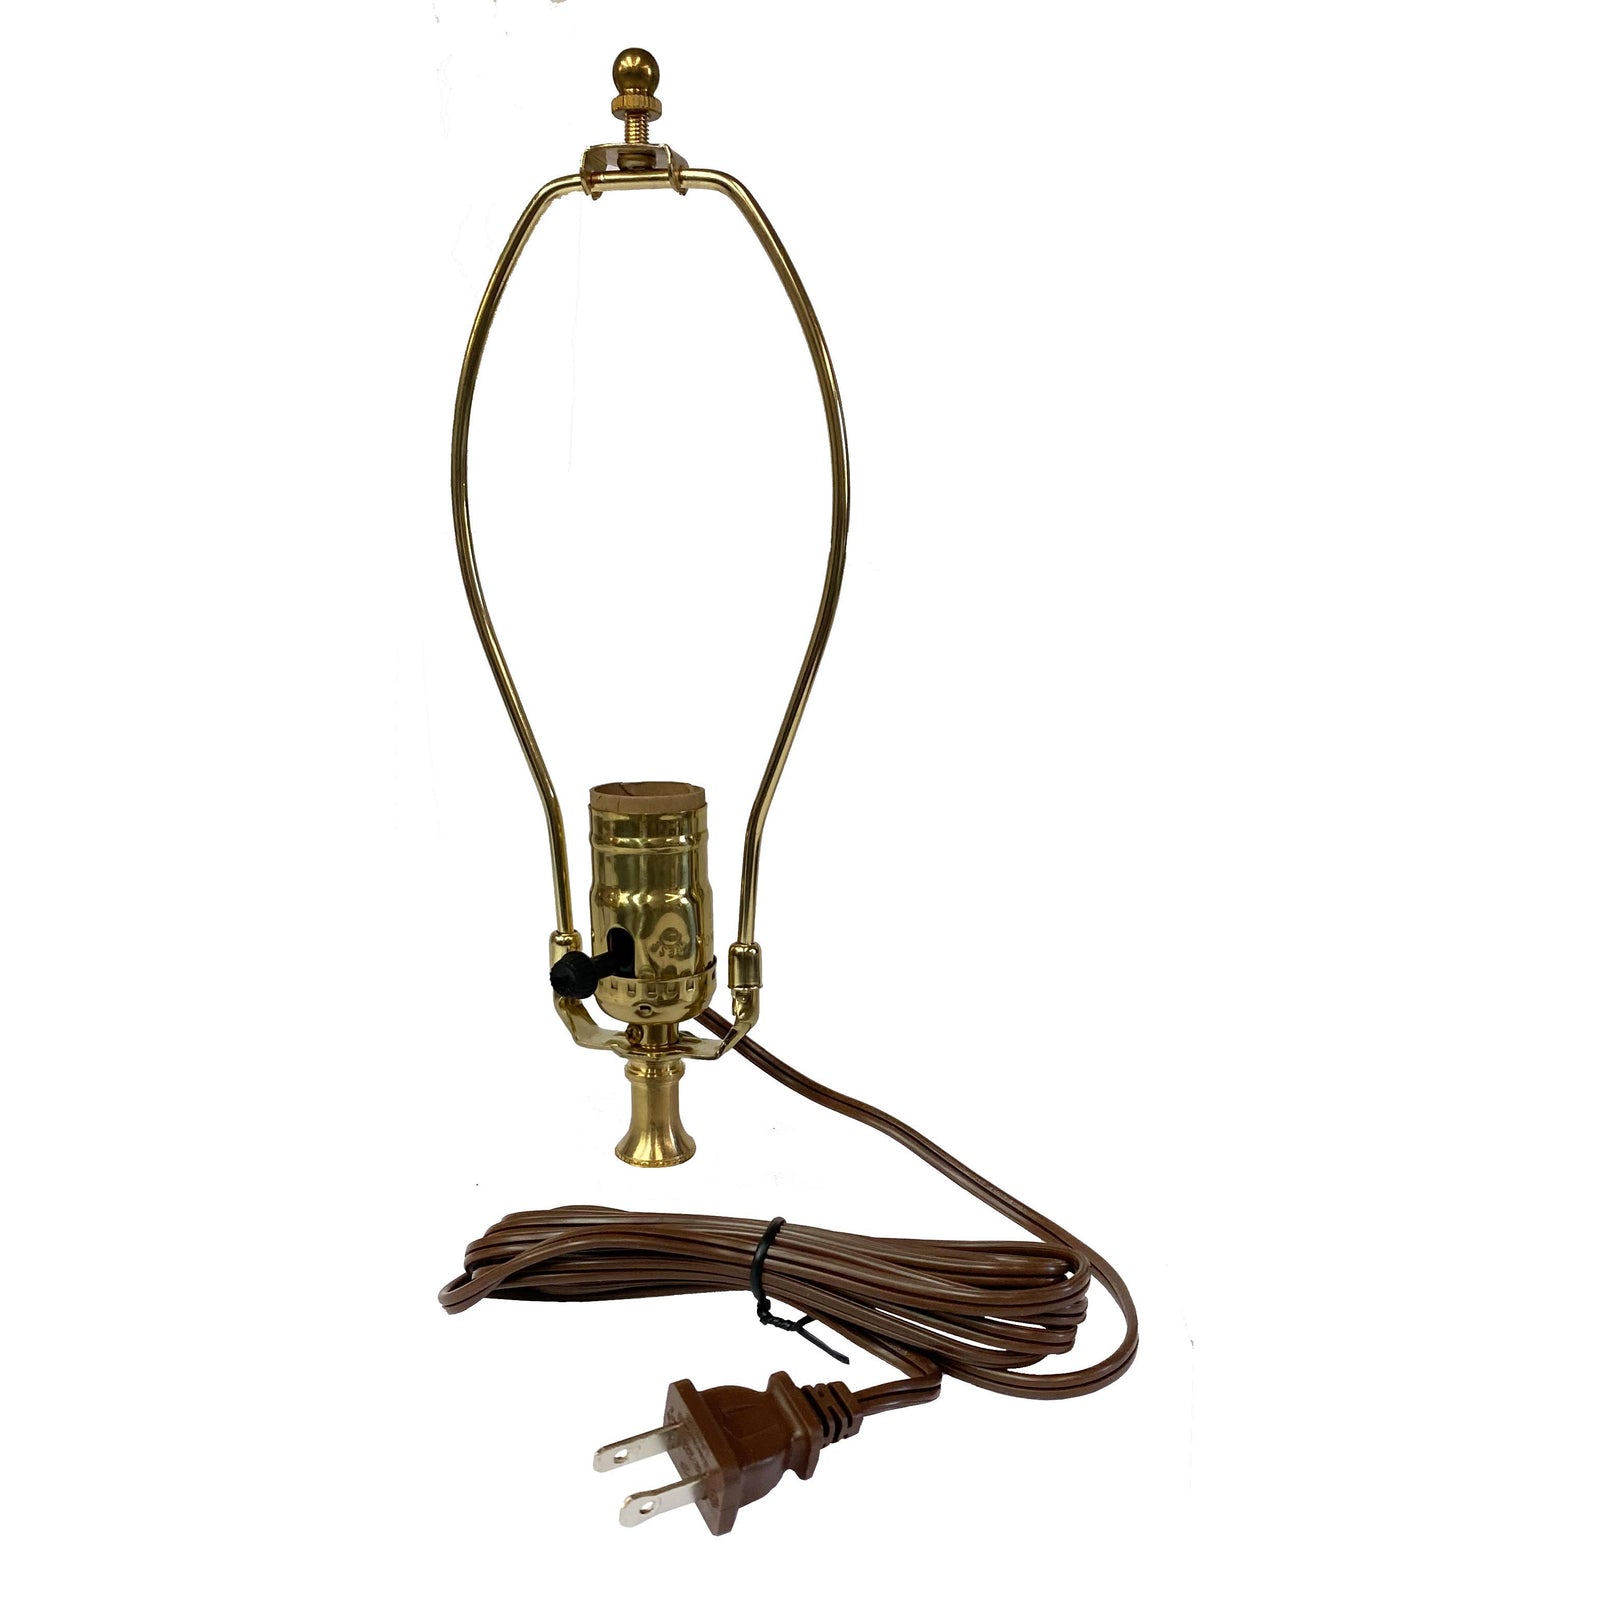 B&p Lamp Flange Base Make-A-Lamp Kit with A 7 inch Harp